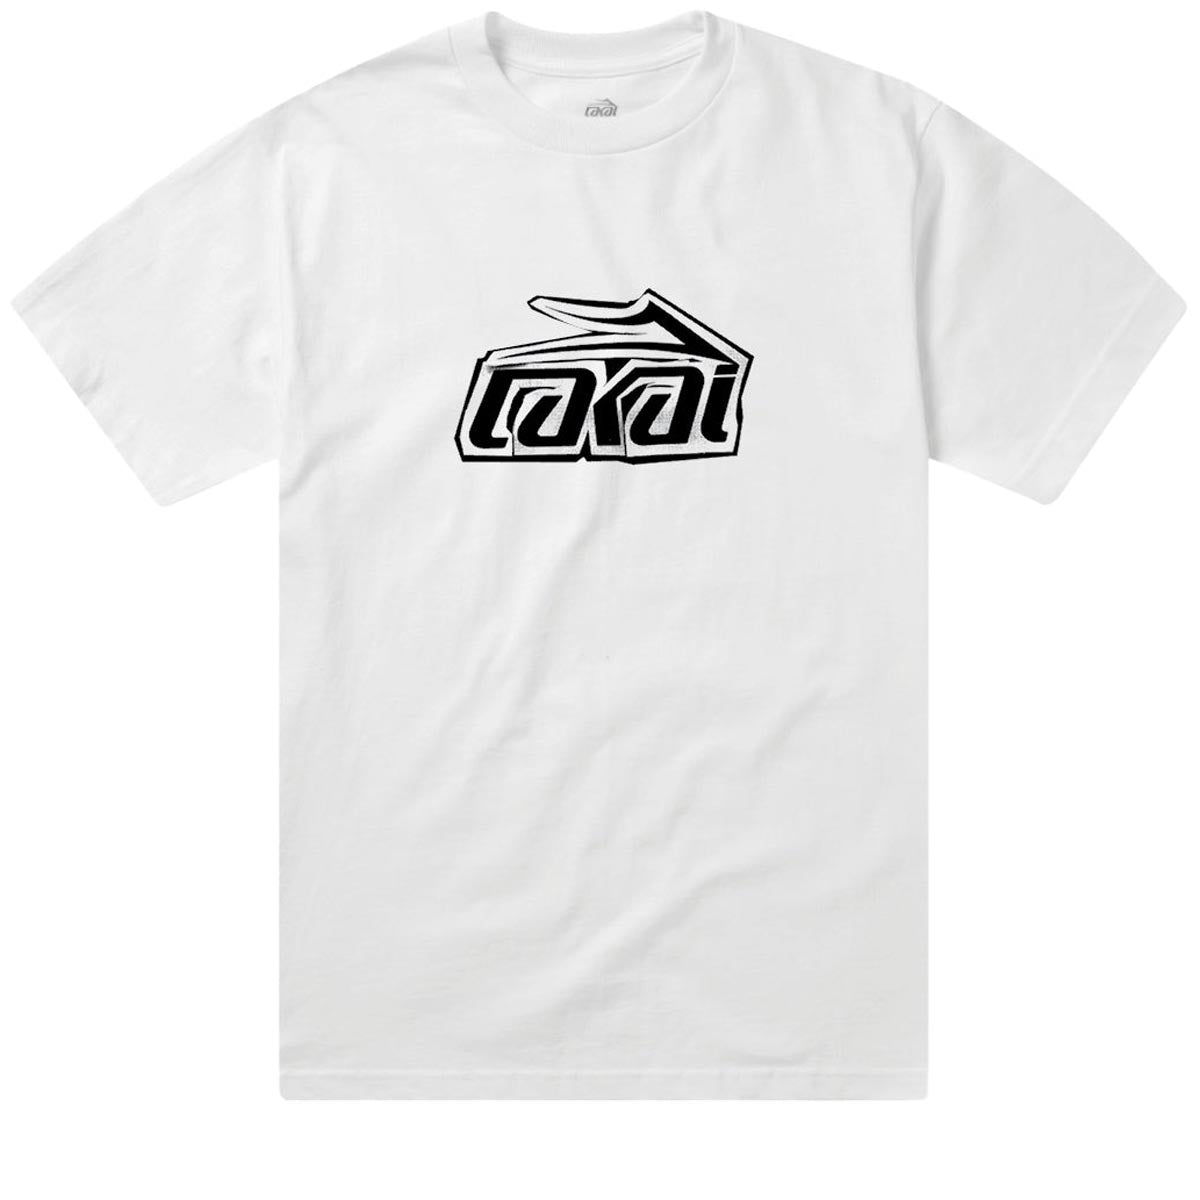 Lakai Fragment Logo T-Shirt - White image 1